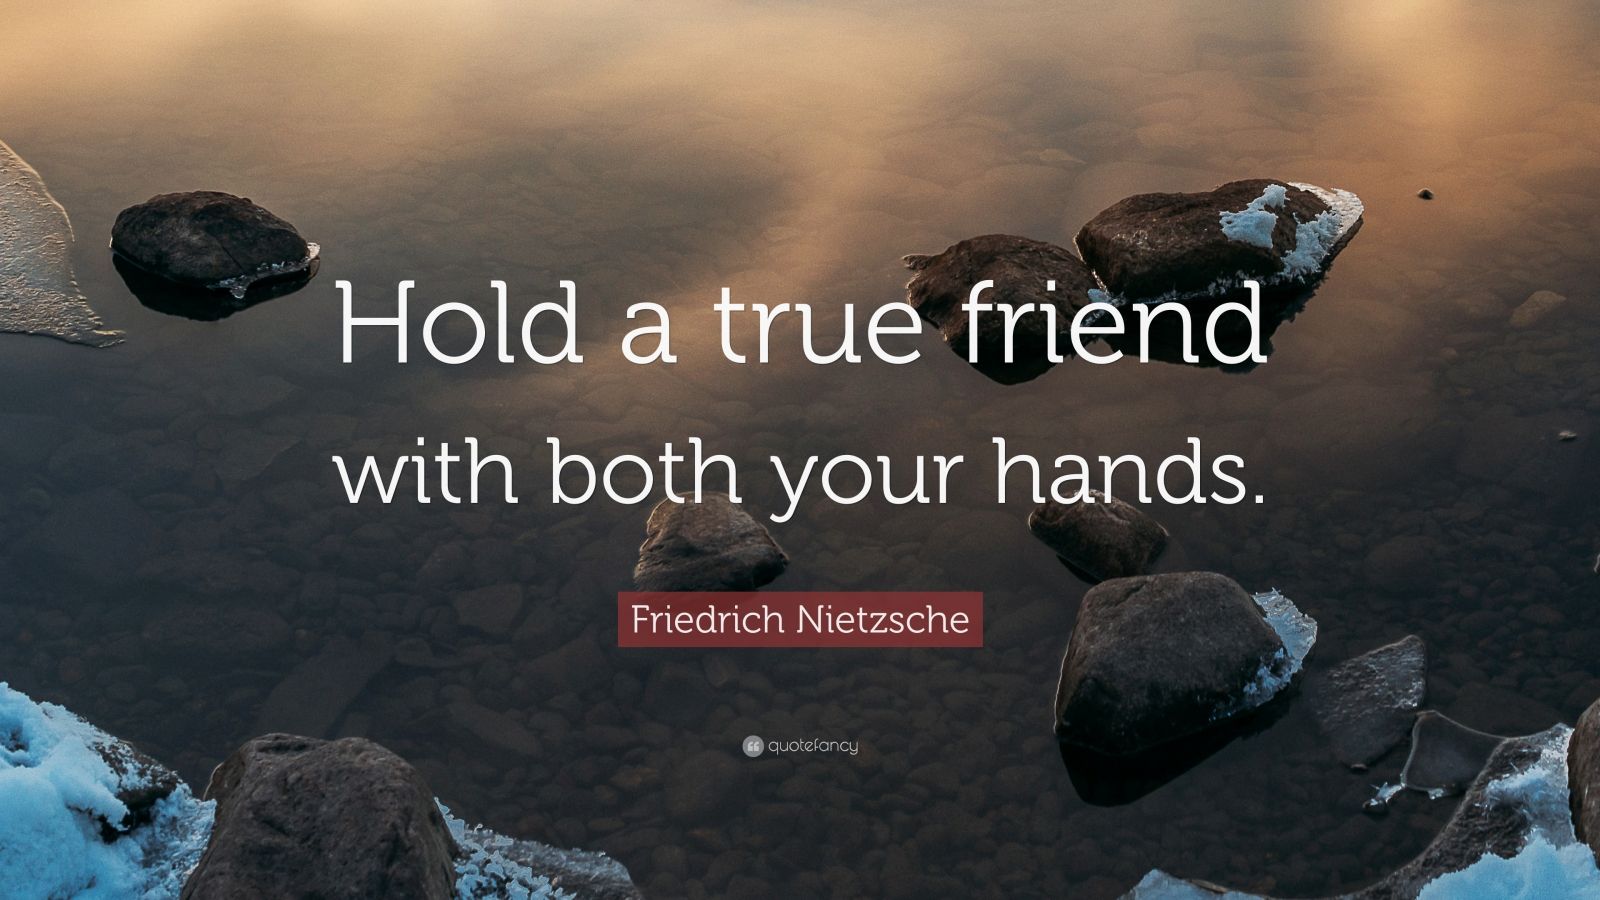 Friedrich Nietzsche Quote: “Hold a true friend with both your hands ...